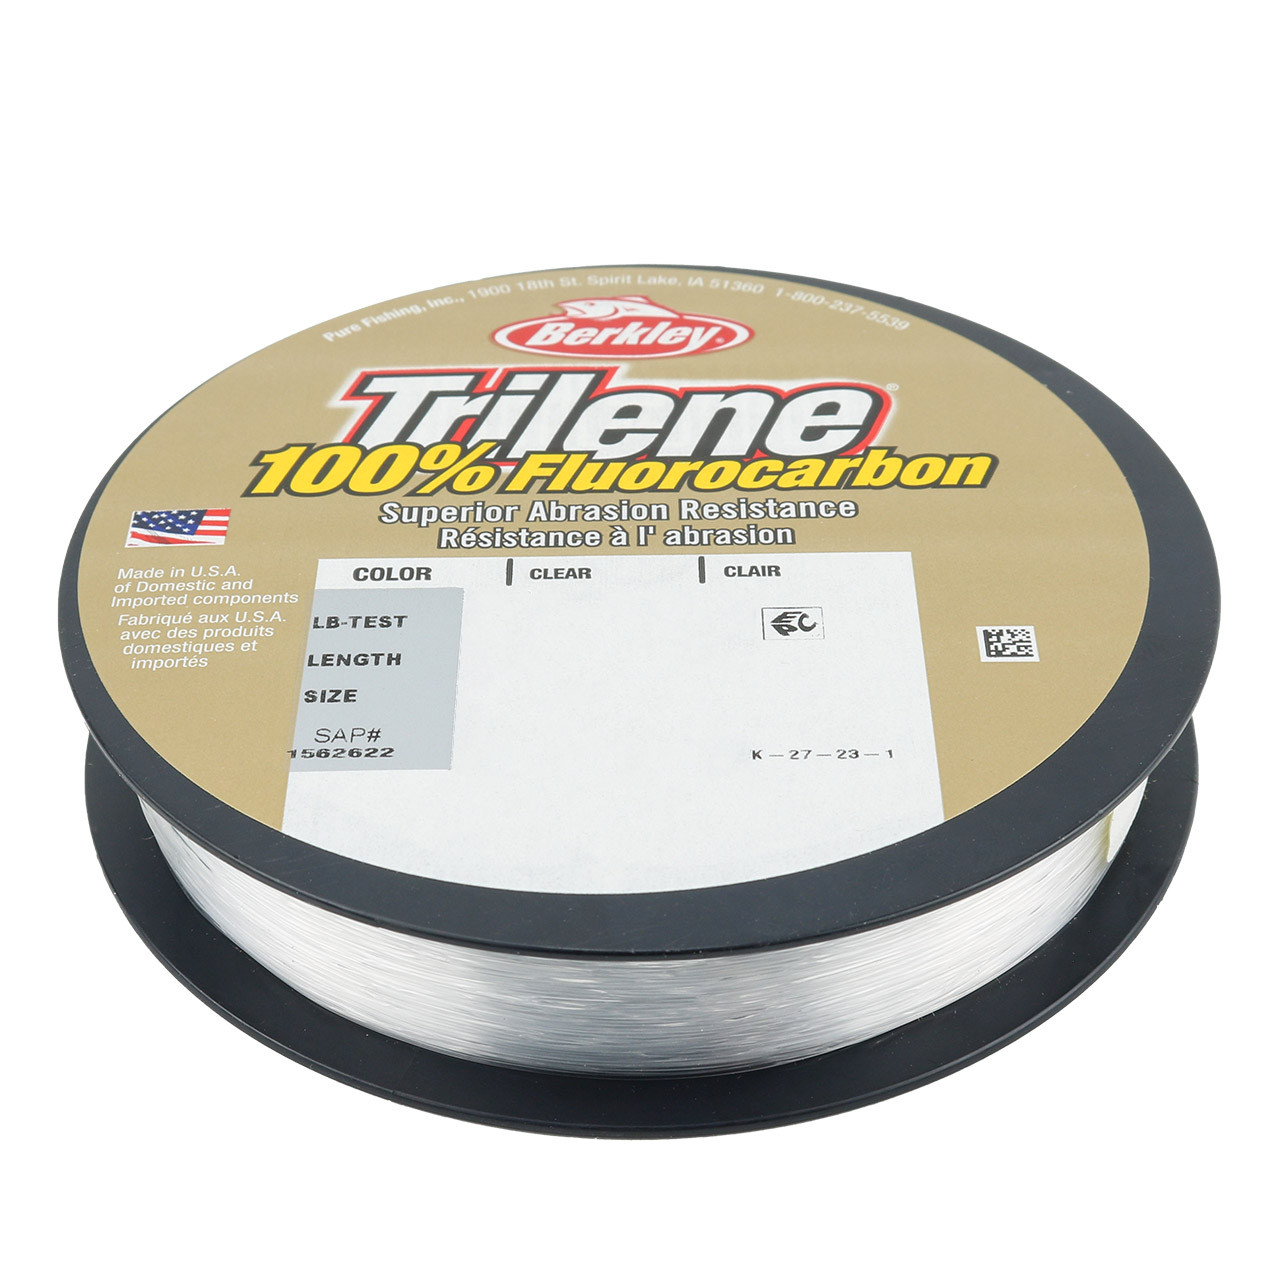 Berkley Trilene 100% Fluorocarbon Professional Grade